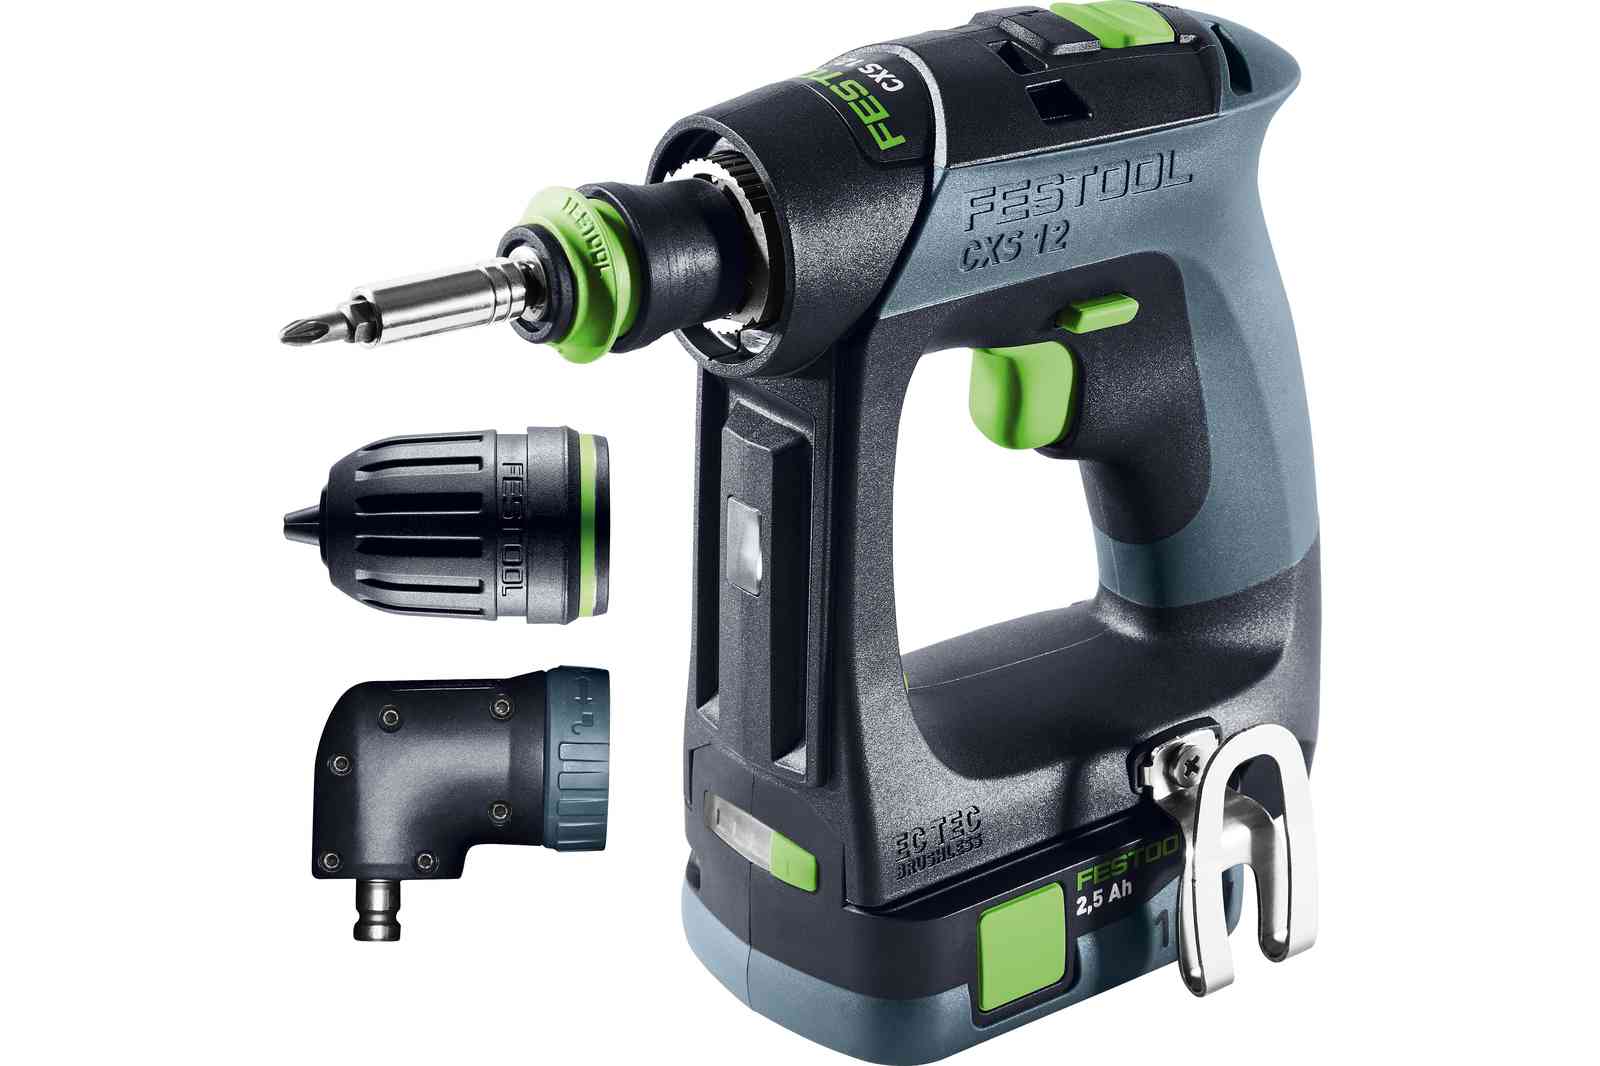 Festool 576869 CXS 12 2,5-Set Cordless Drill